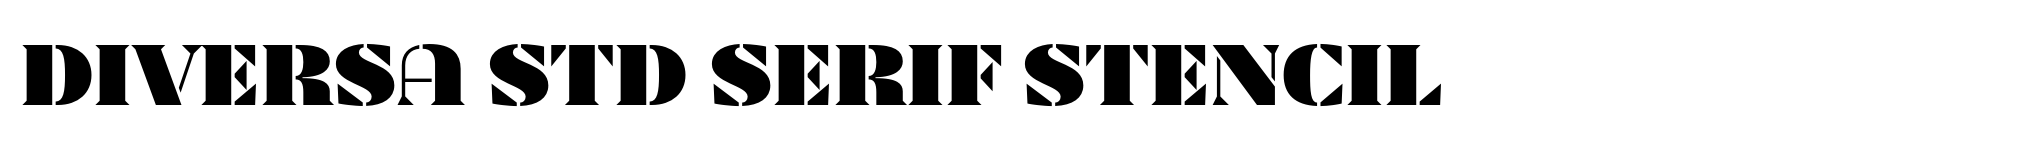 Diversa Std Serif Stencil image